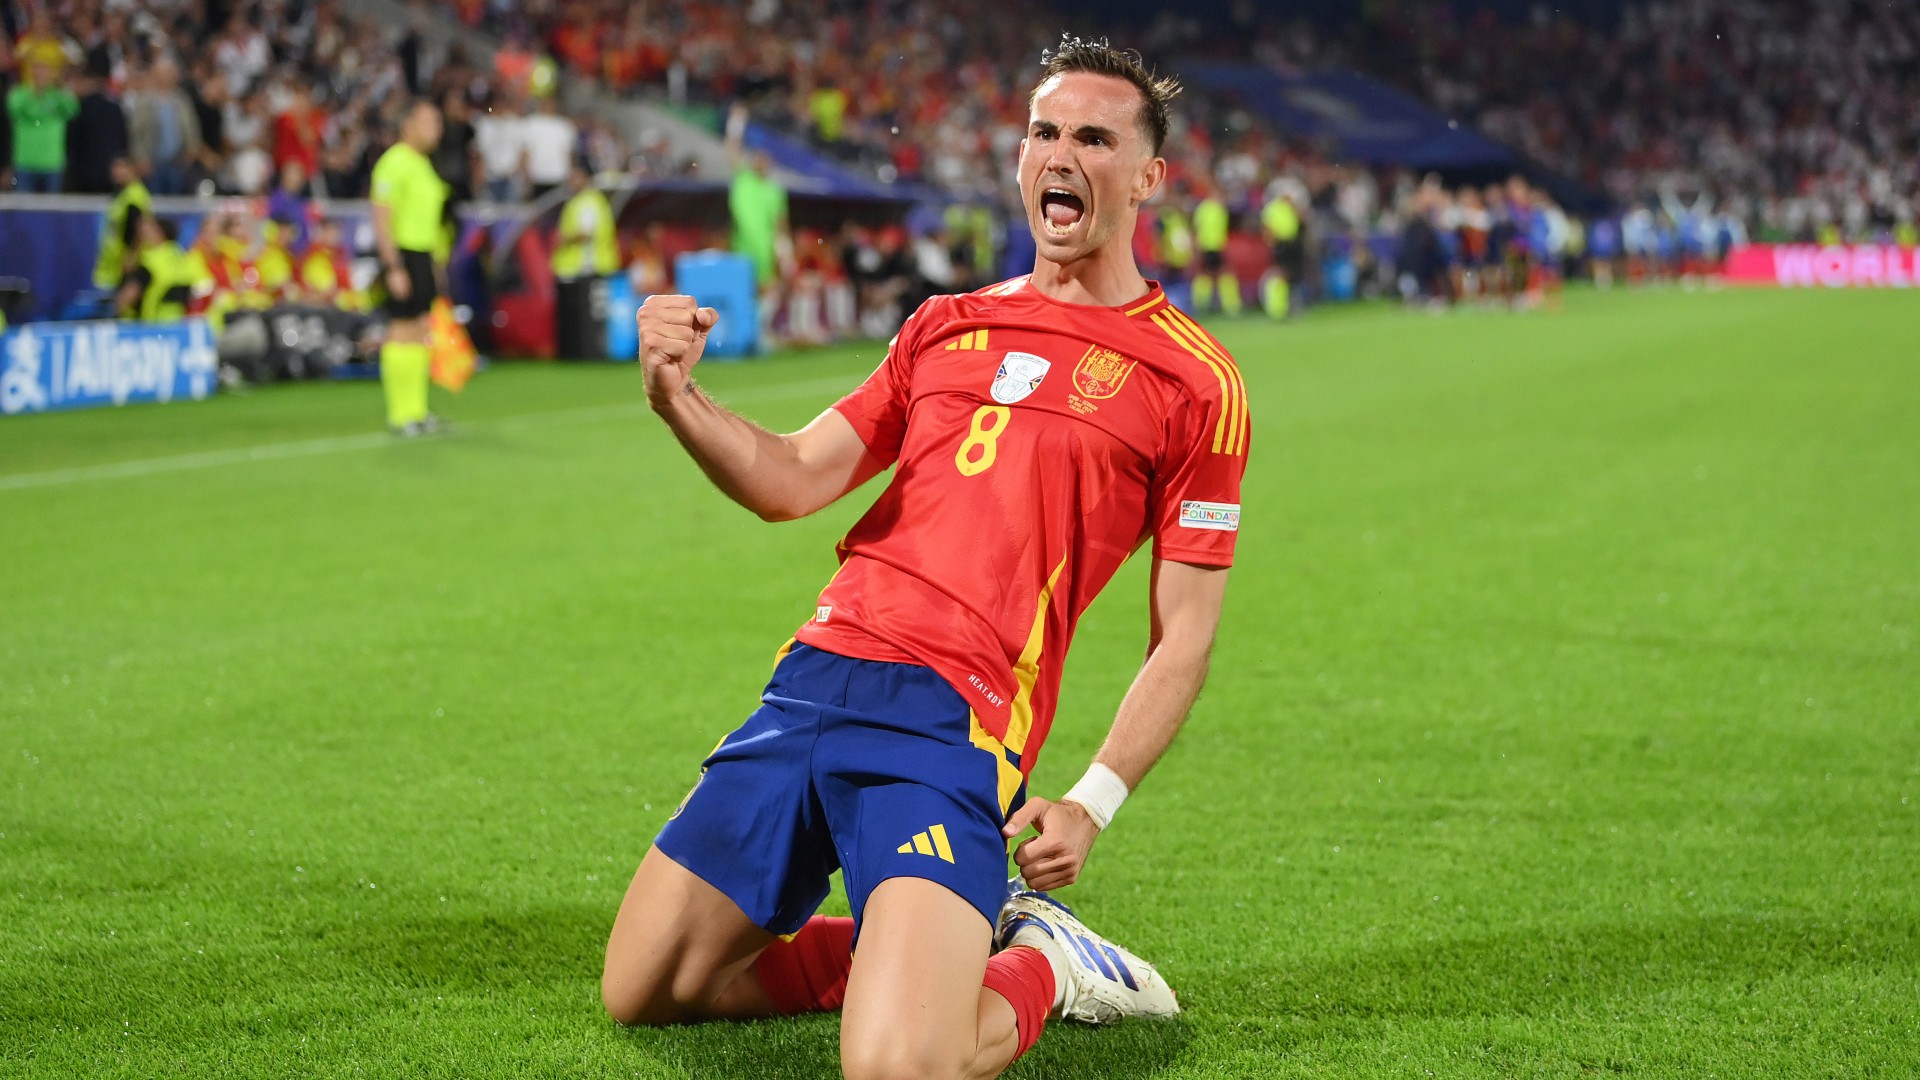 Fabian wants to make Spain history